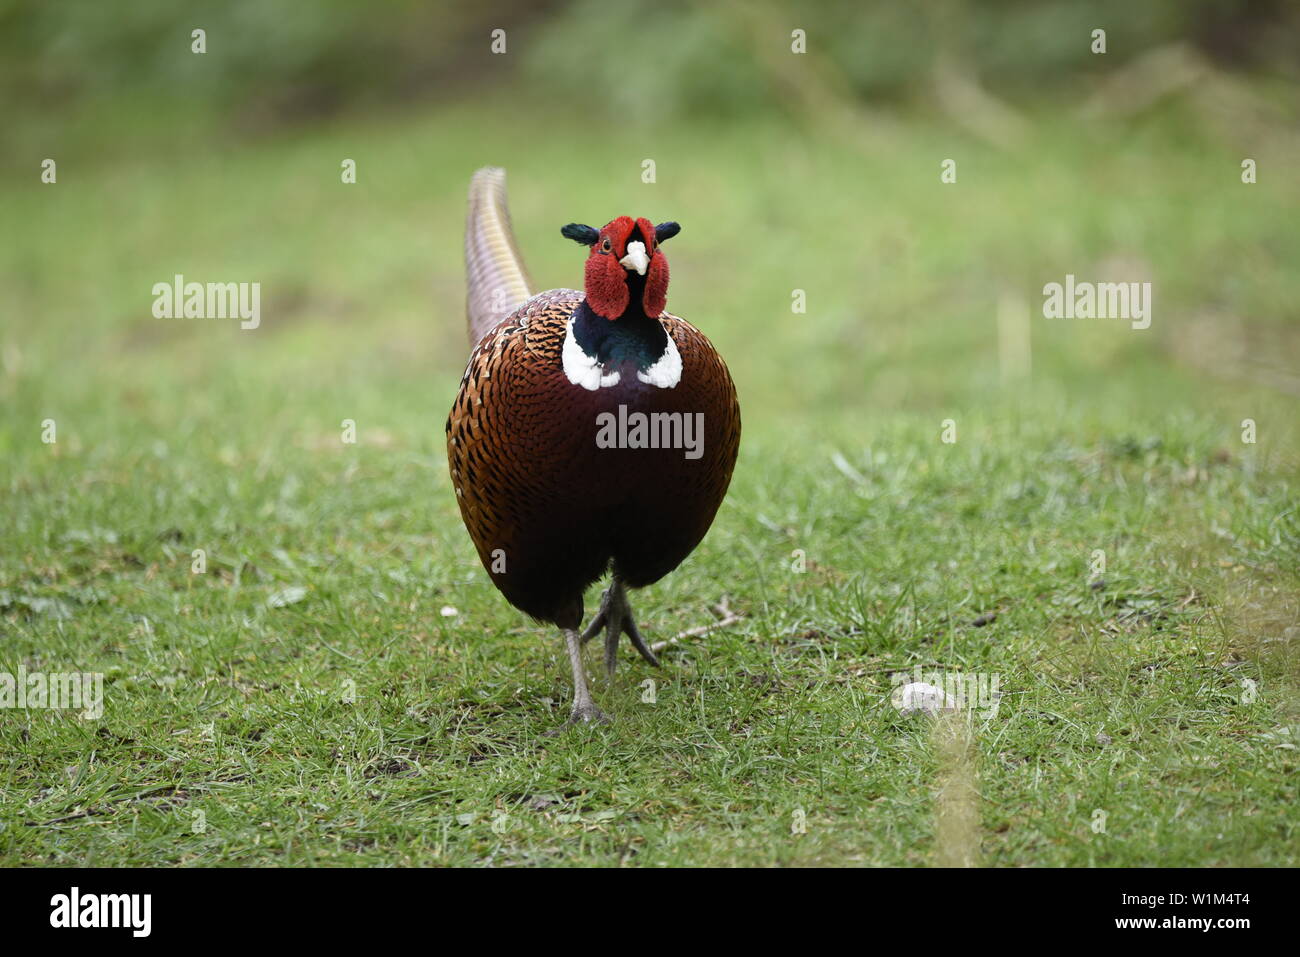 Common Pheasant Male walking towards camera on grass Stock Photo